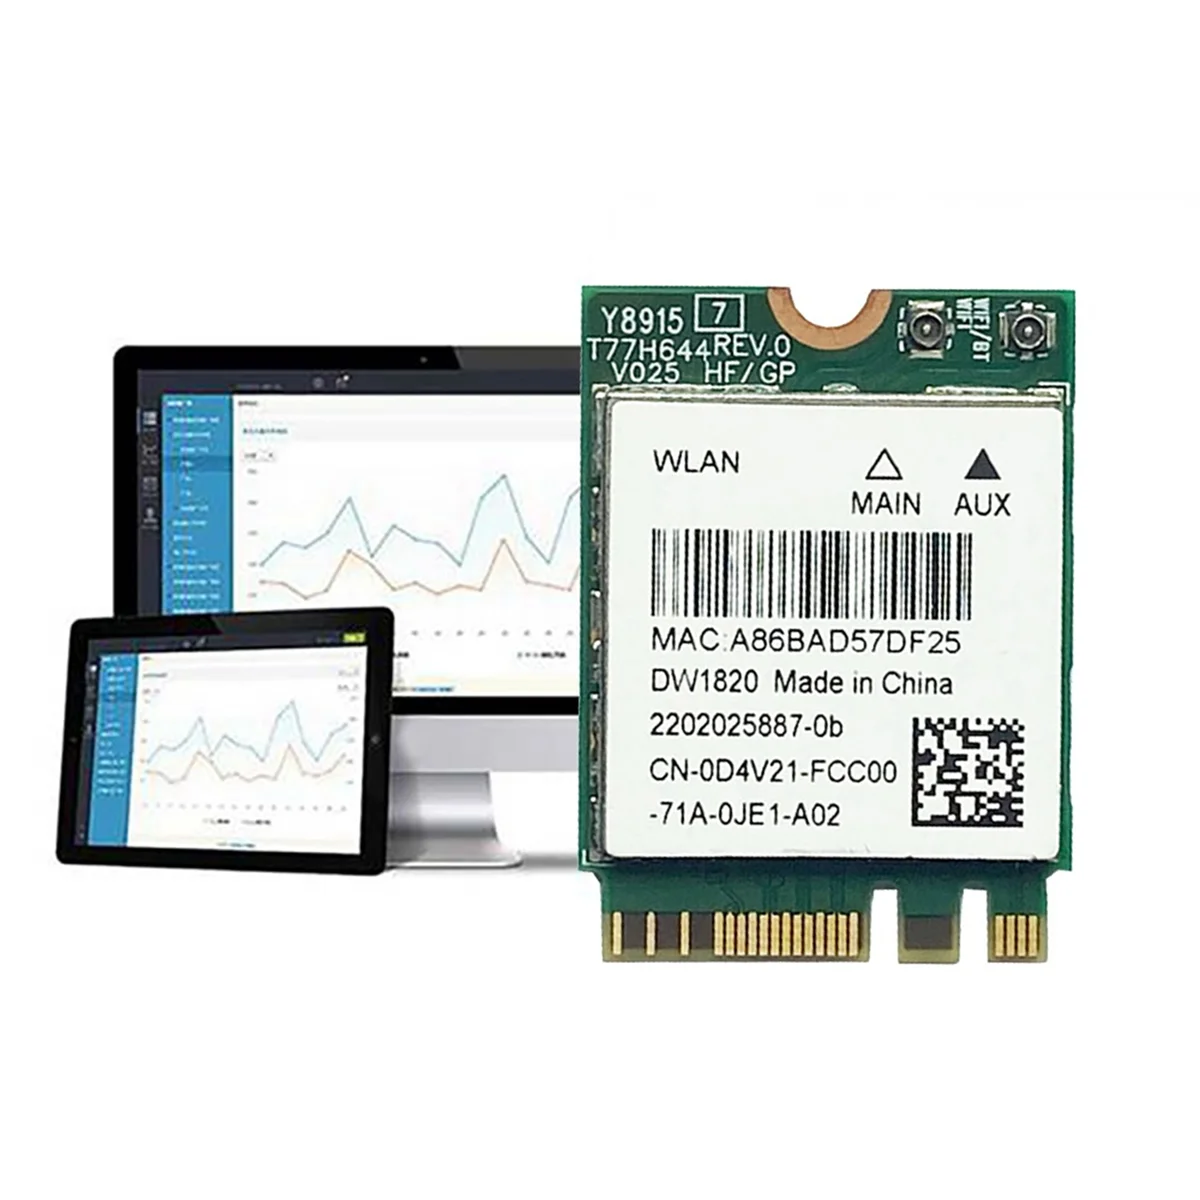 

3X DW1820 QCNFA344A Wireless Network Card 2.4G+5G Dual-Band Gigabit Bluetooth 4.1 NGFF Network Card Supports 802.11AC